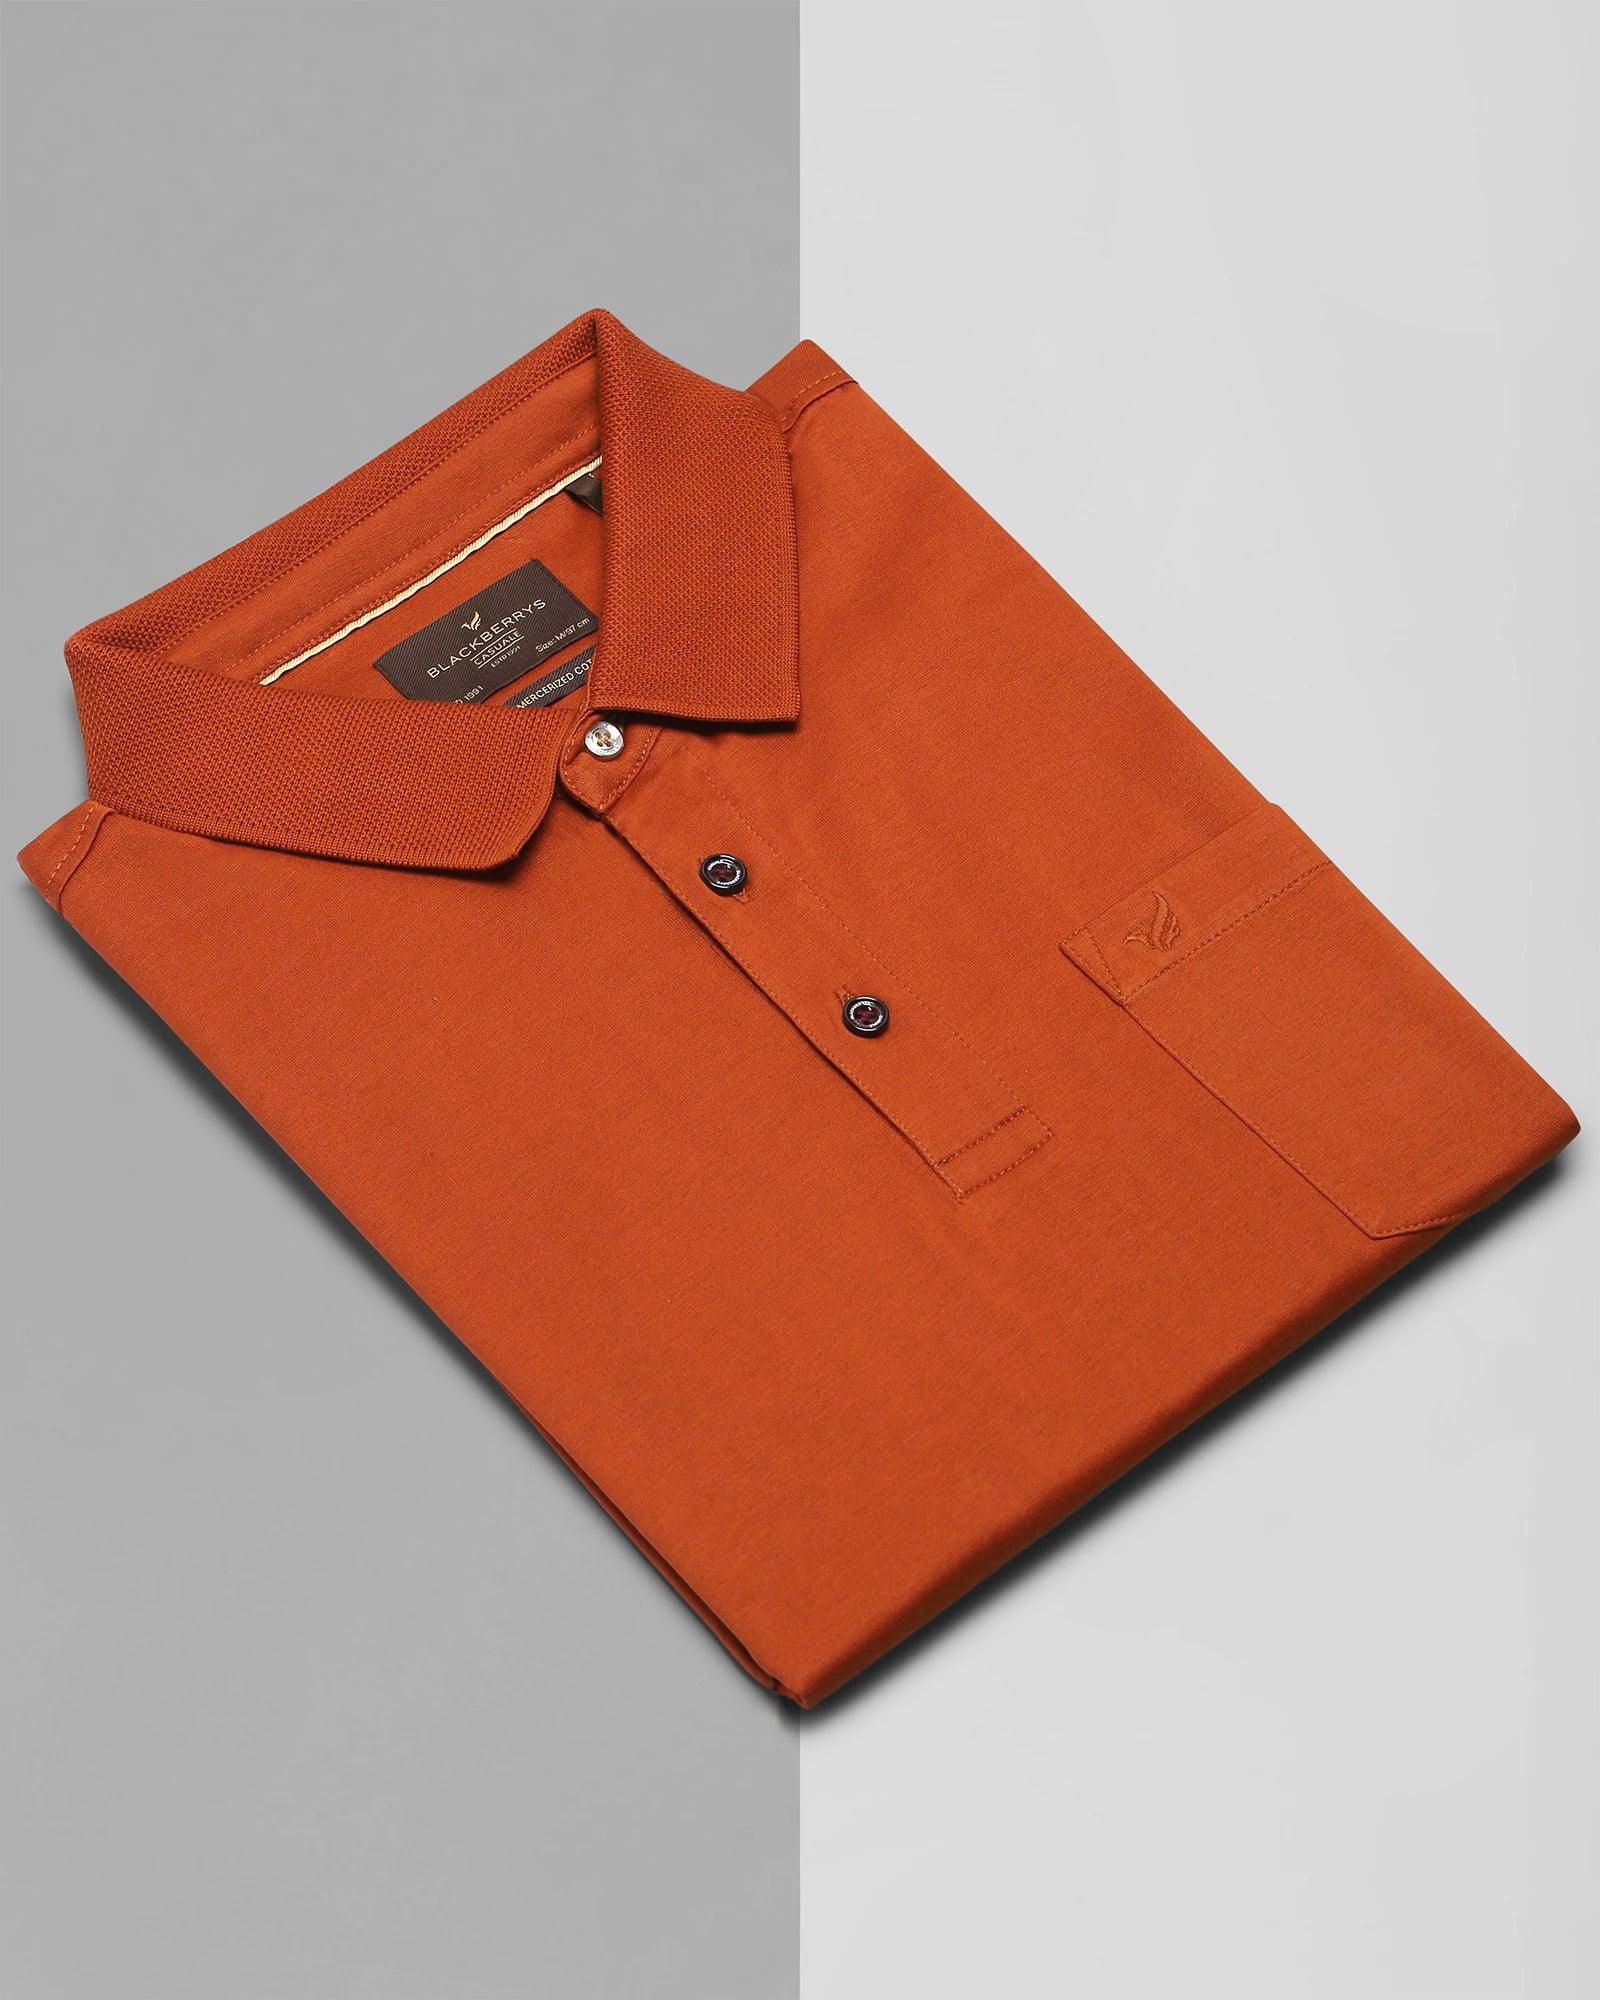 Polo Rust Orange Solid T Shirt - Mercury